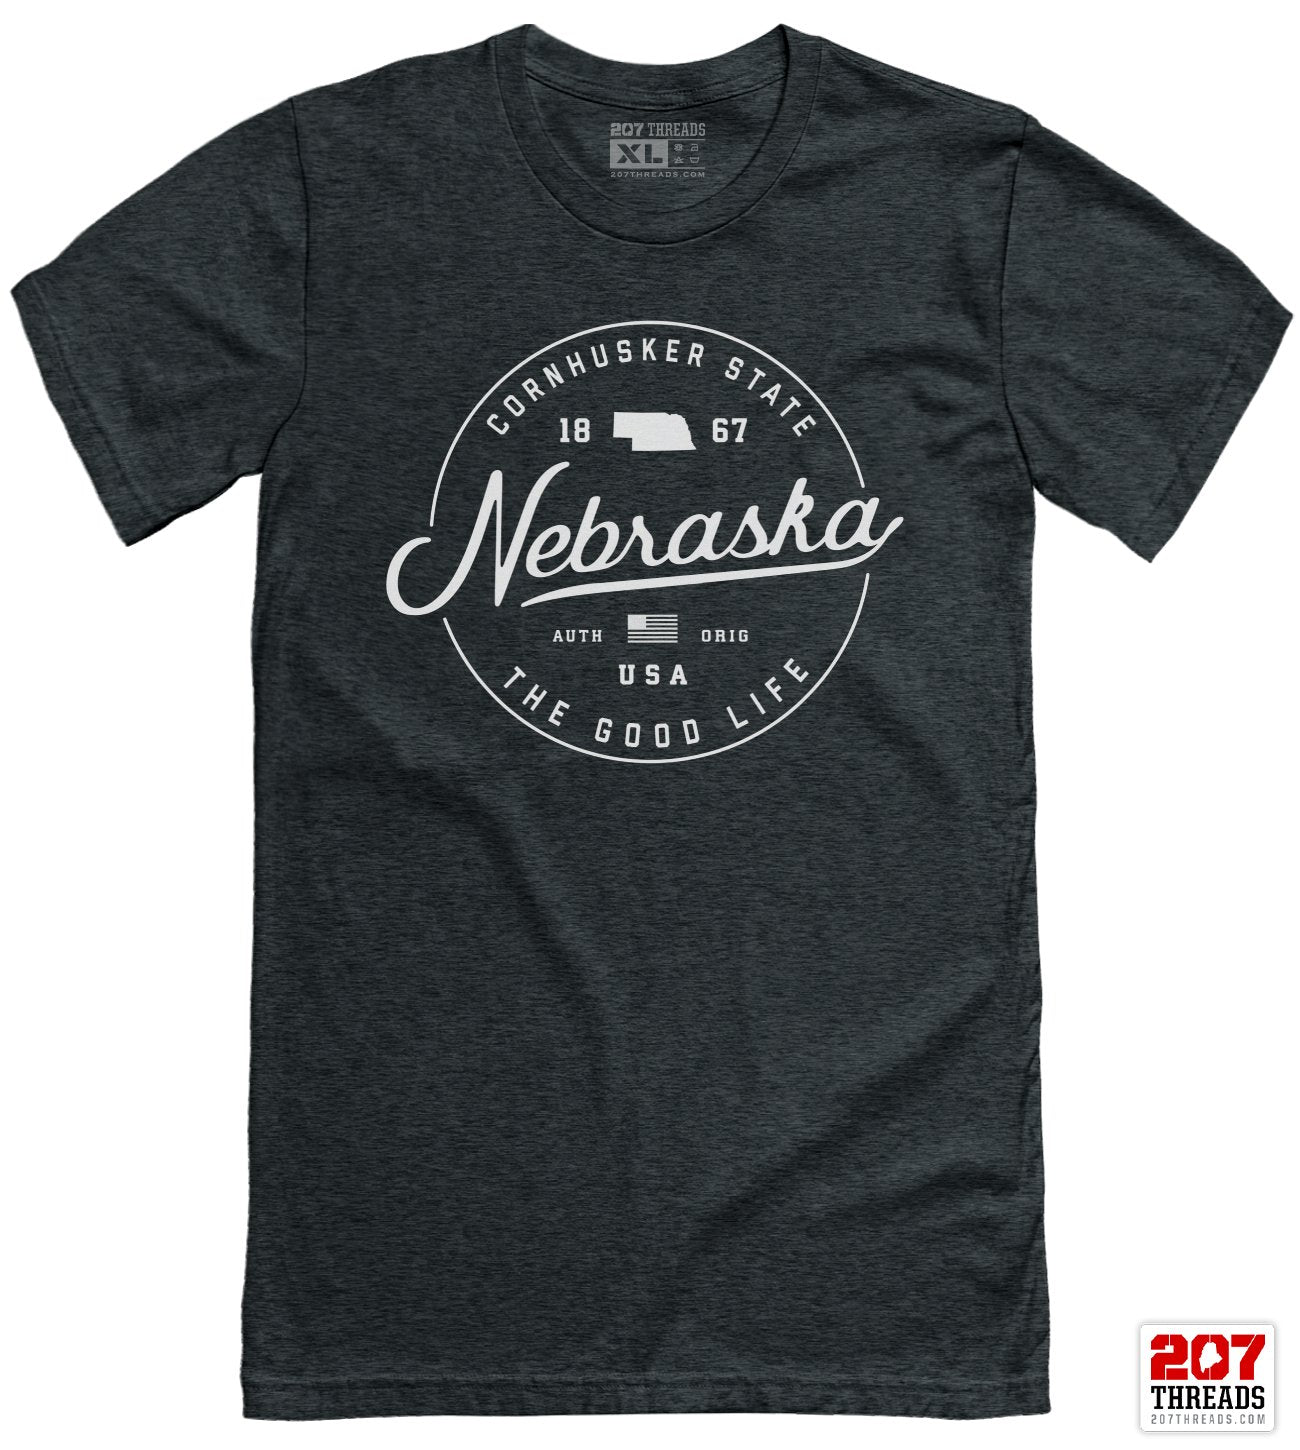 State of Nebraska T-Shirt - Soft Nebraska Tee